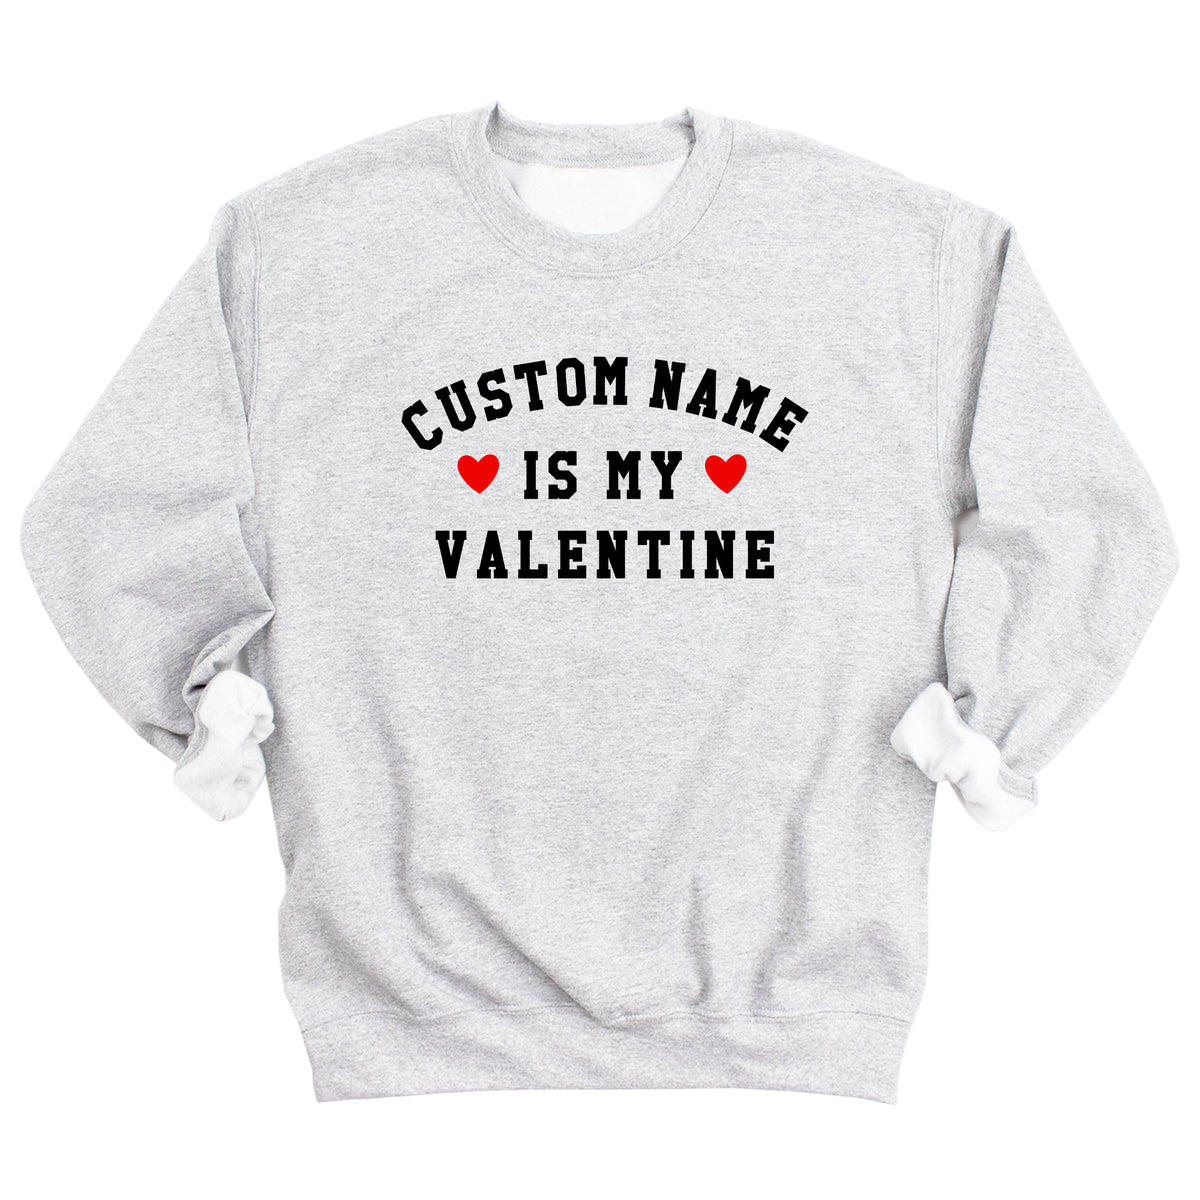 Custom Name is My Valentine Sweatshirt